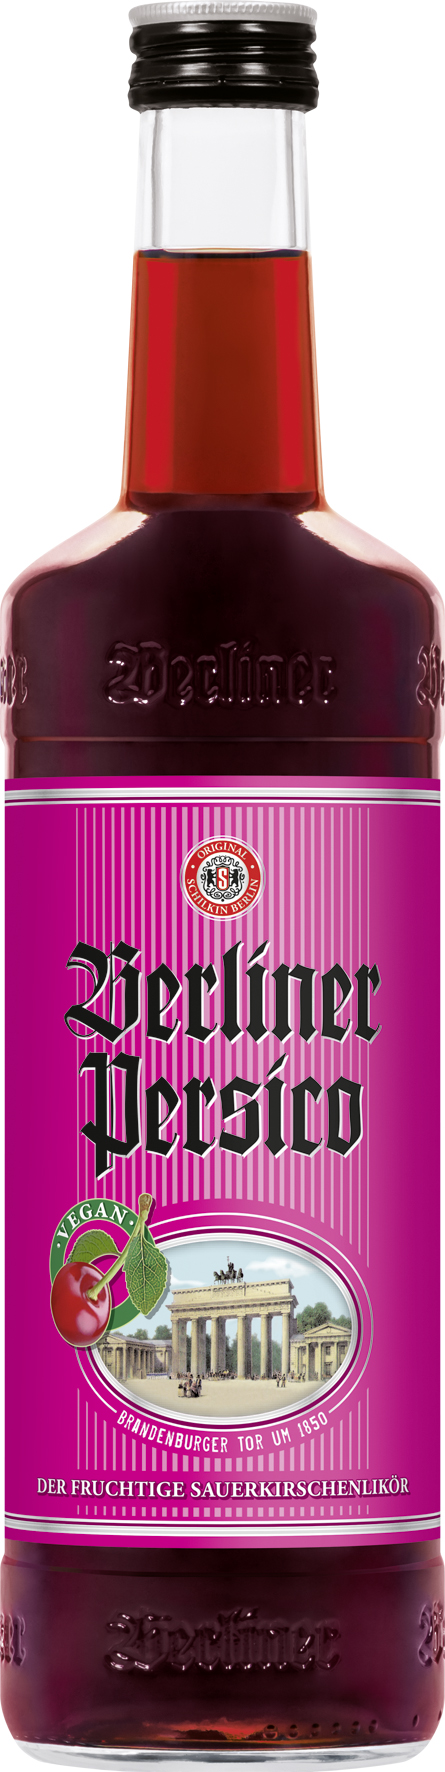 Berliner Persico Sauerkirschlikör - 0,7L 16% vol